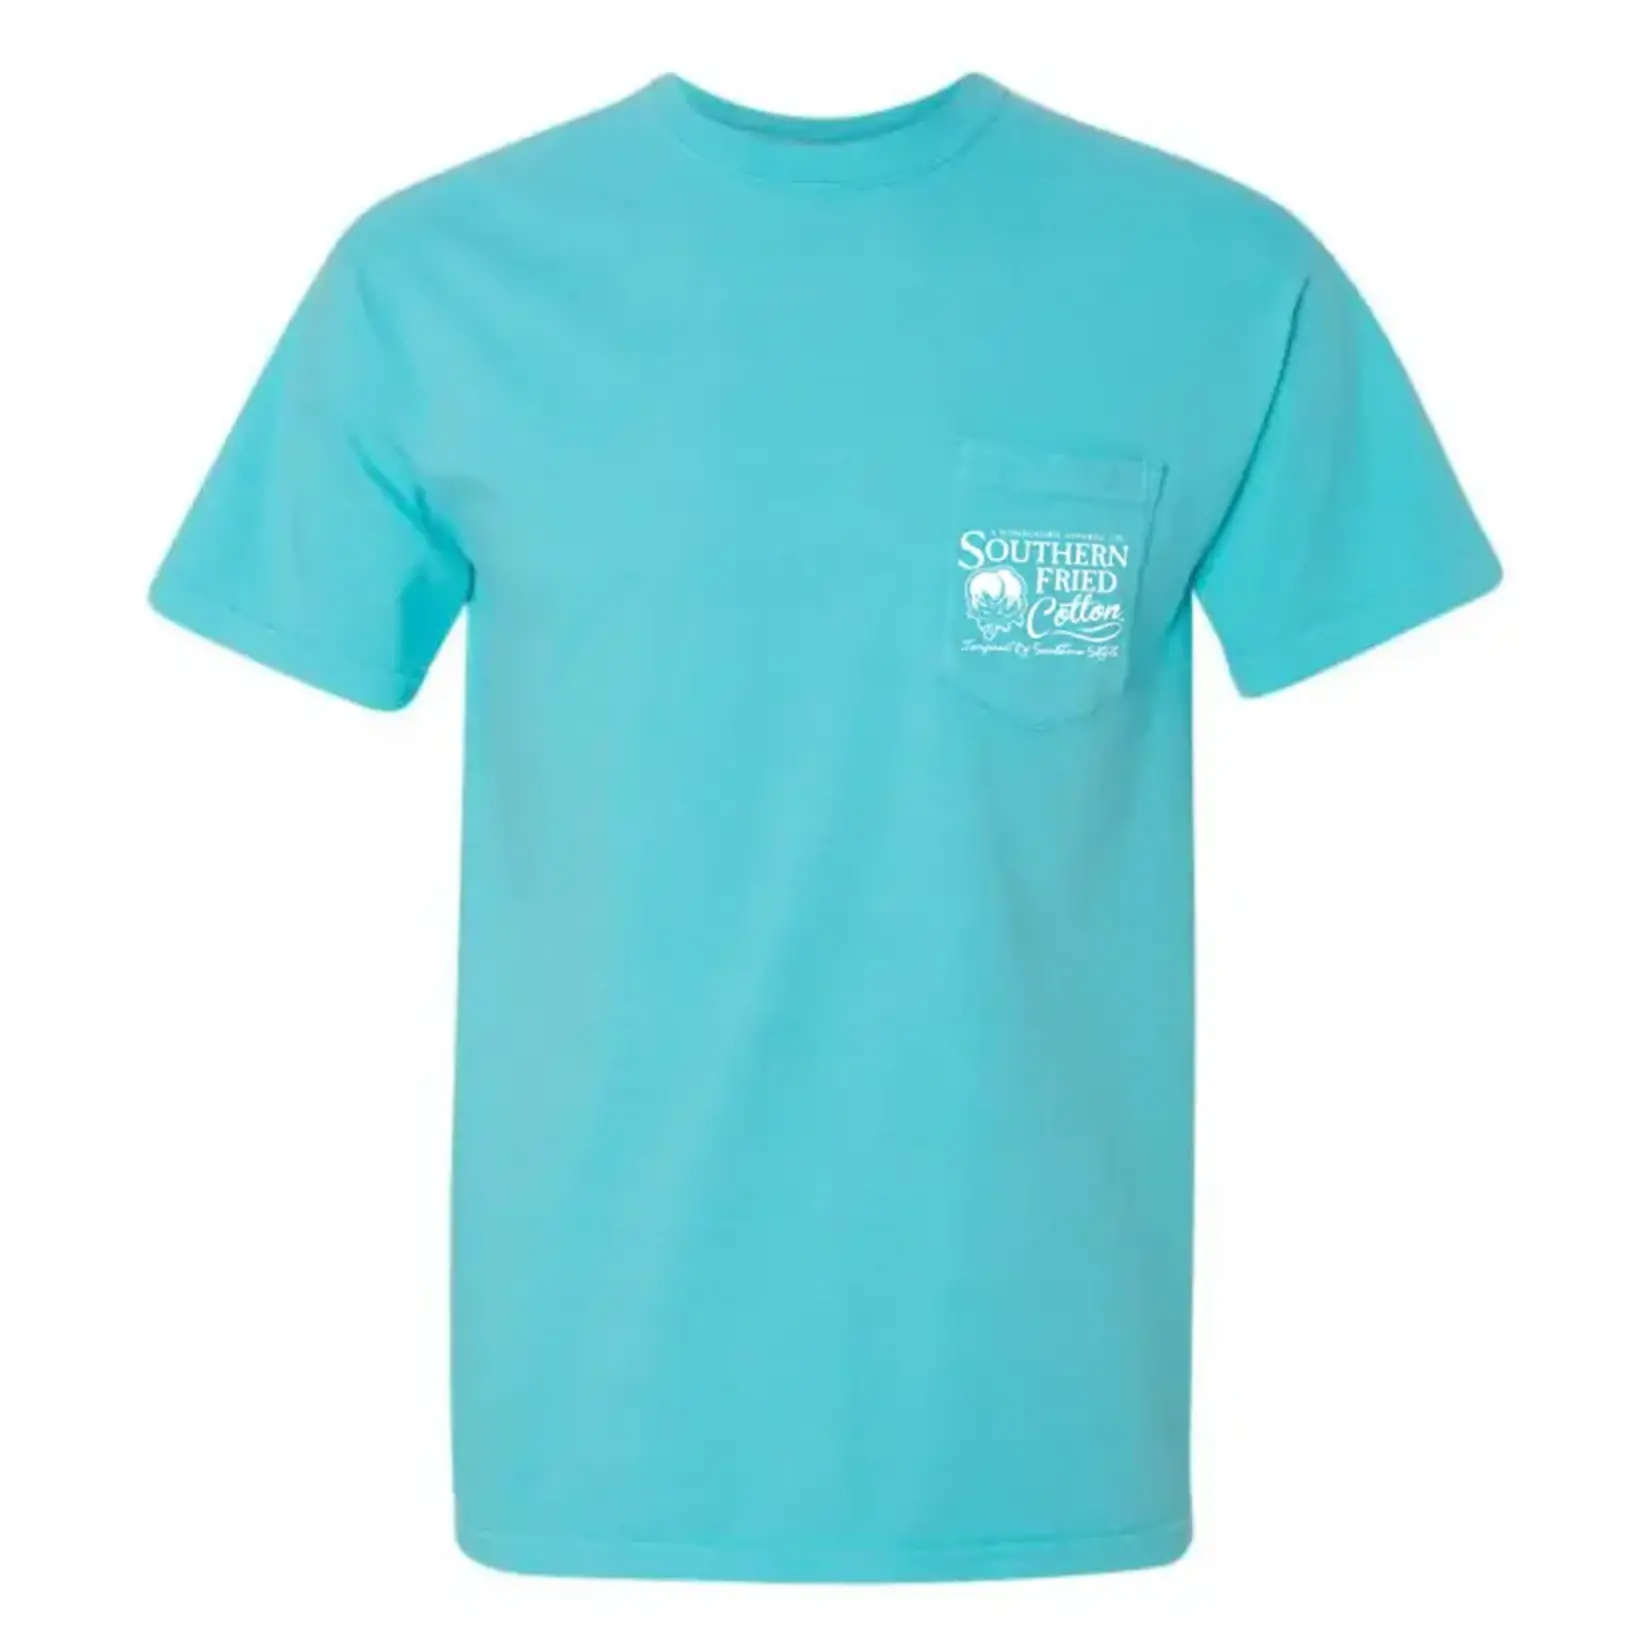 Southern Fried Cotton Southern Fried Cotton Women's Make Waves S/S TEE Shirt